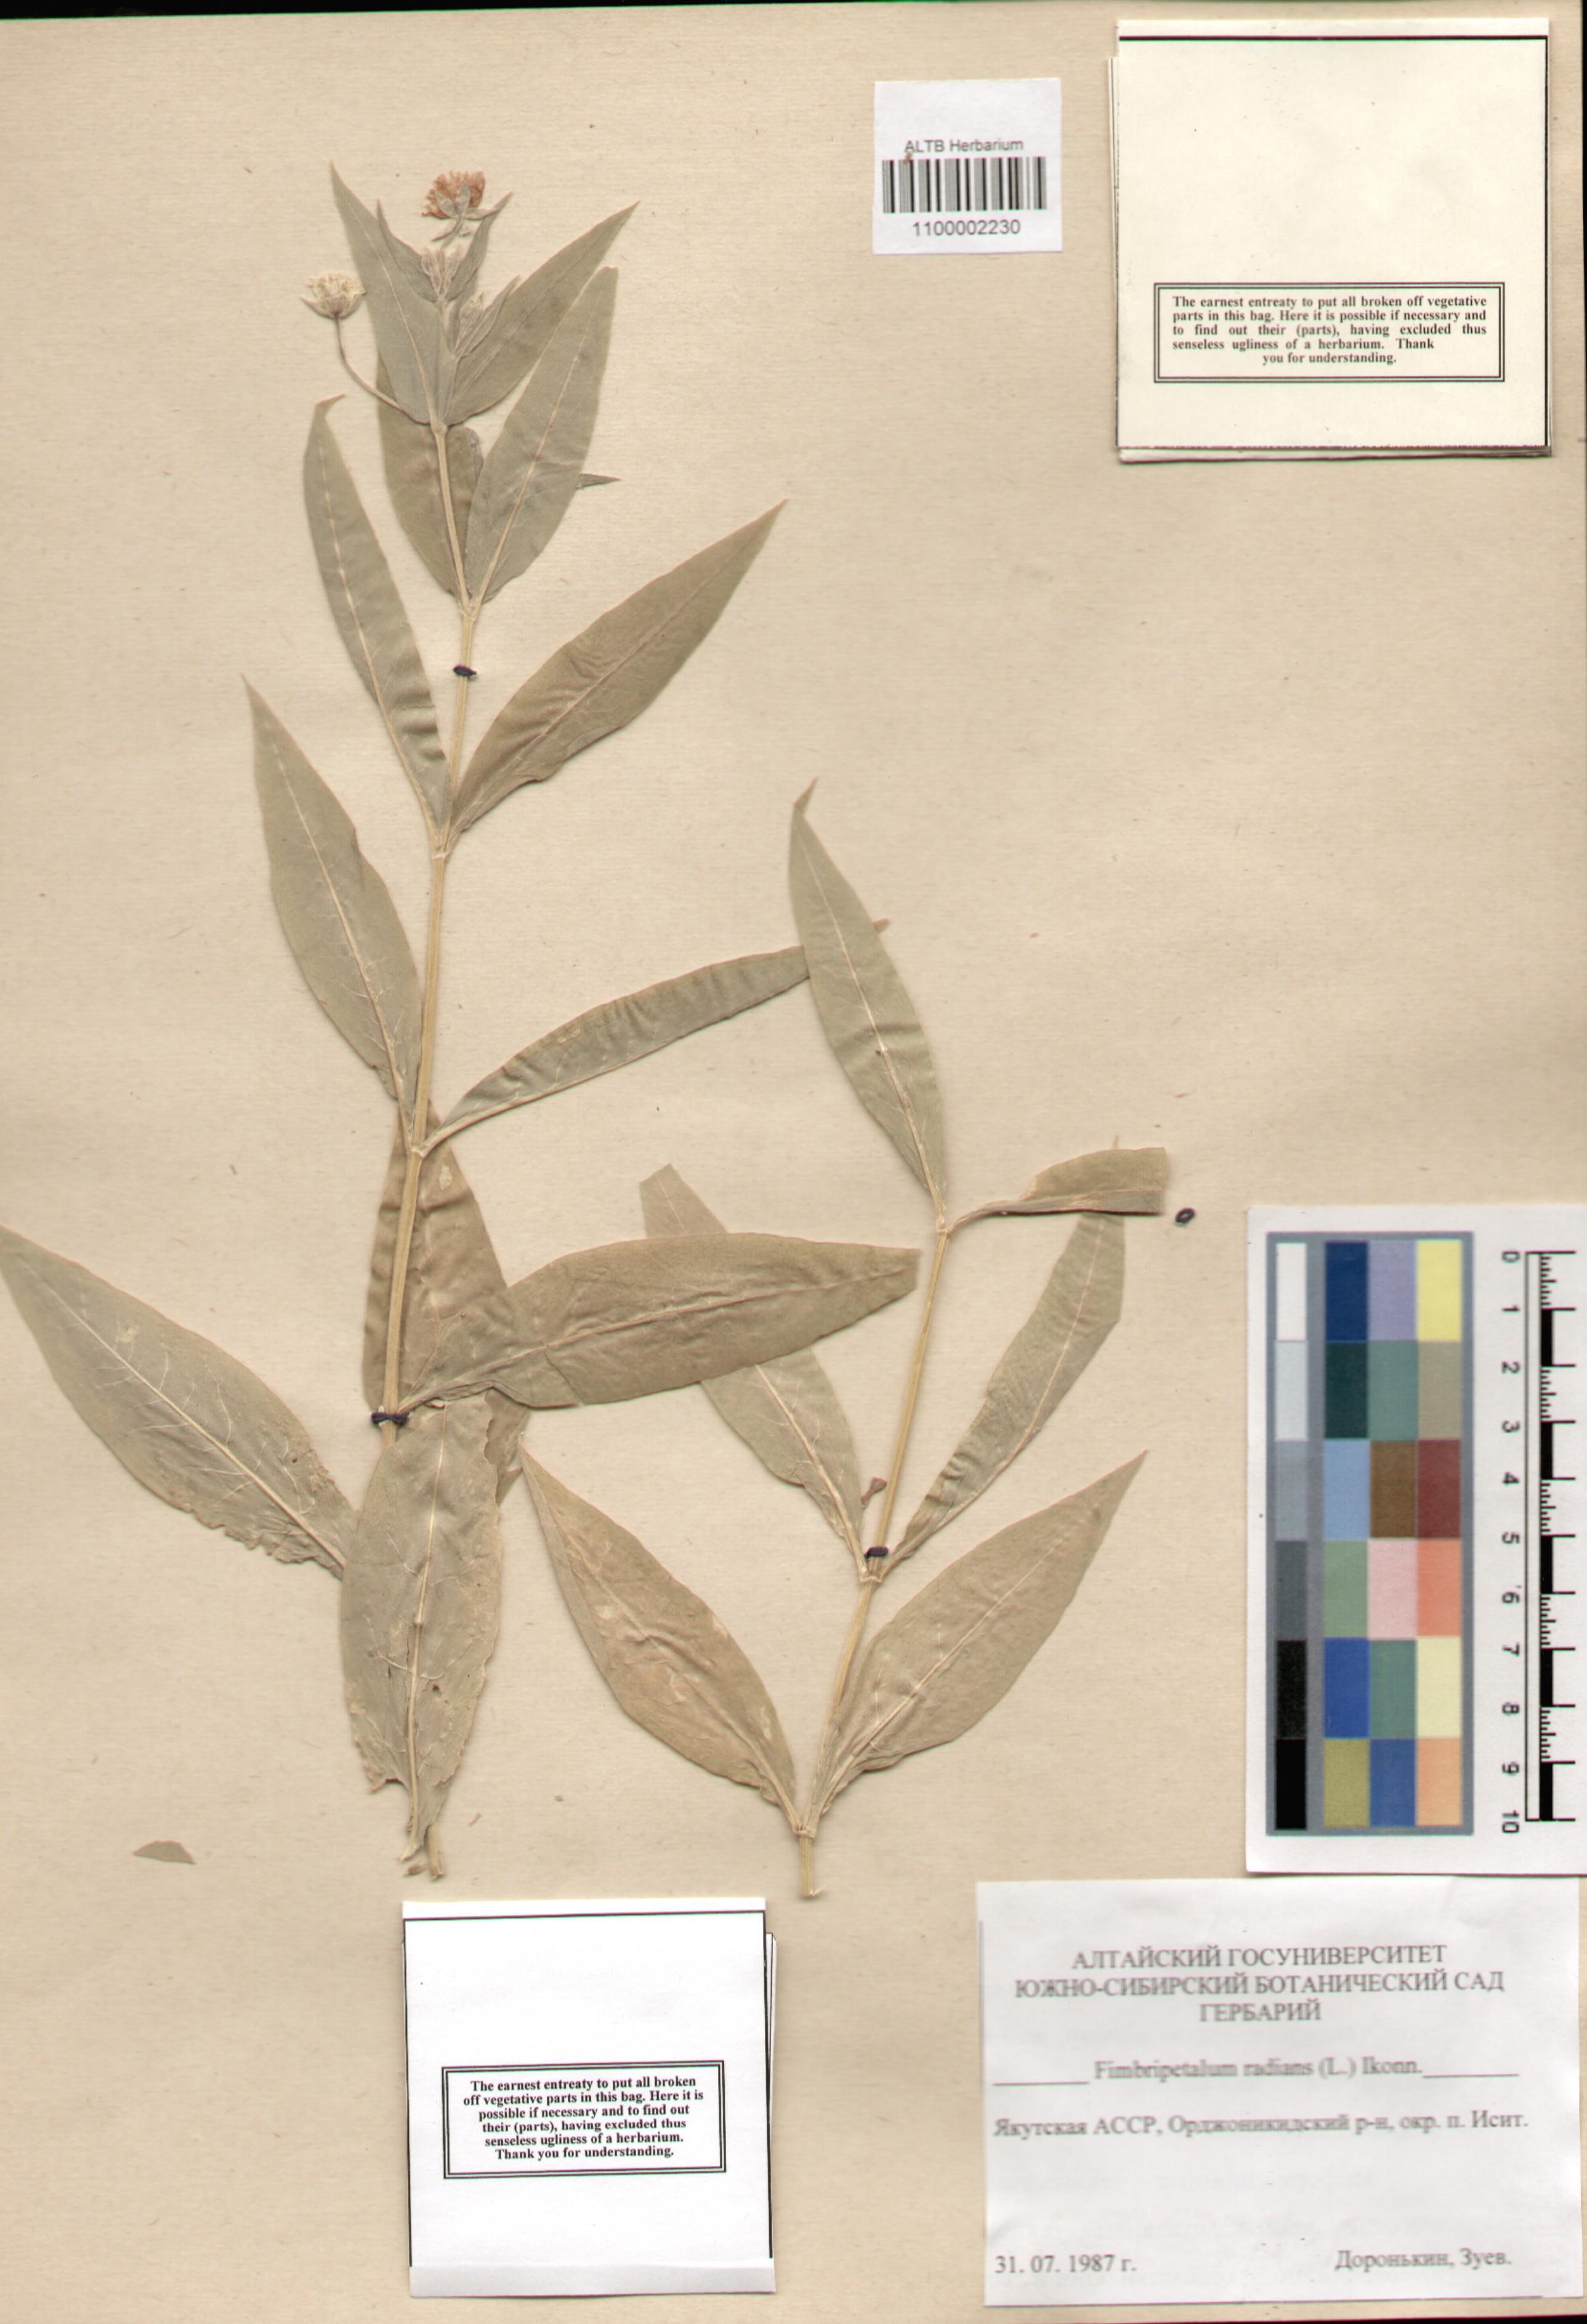 Caryophyllaceae,Fimbripetalum radians (L.) Ikonn.